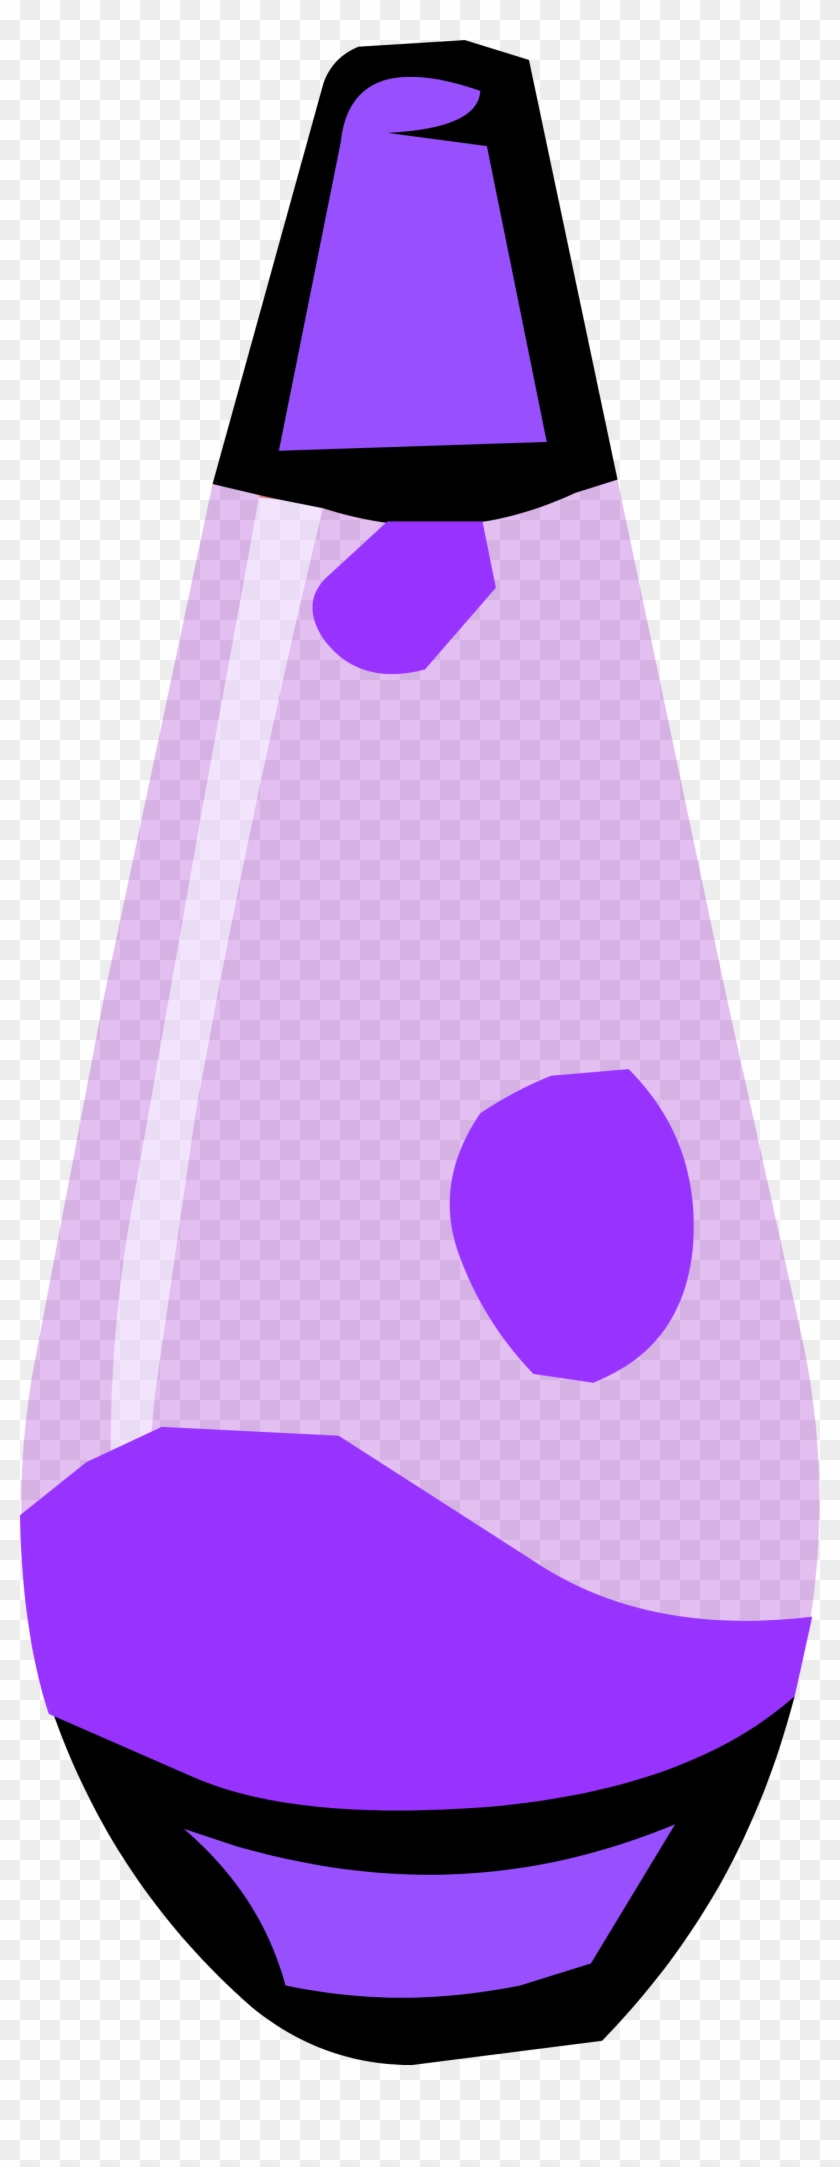 Purple Lava Lamp - Lava Lamp Clip Art #442945